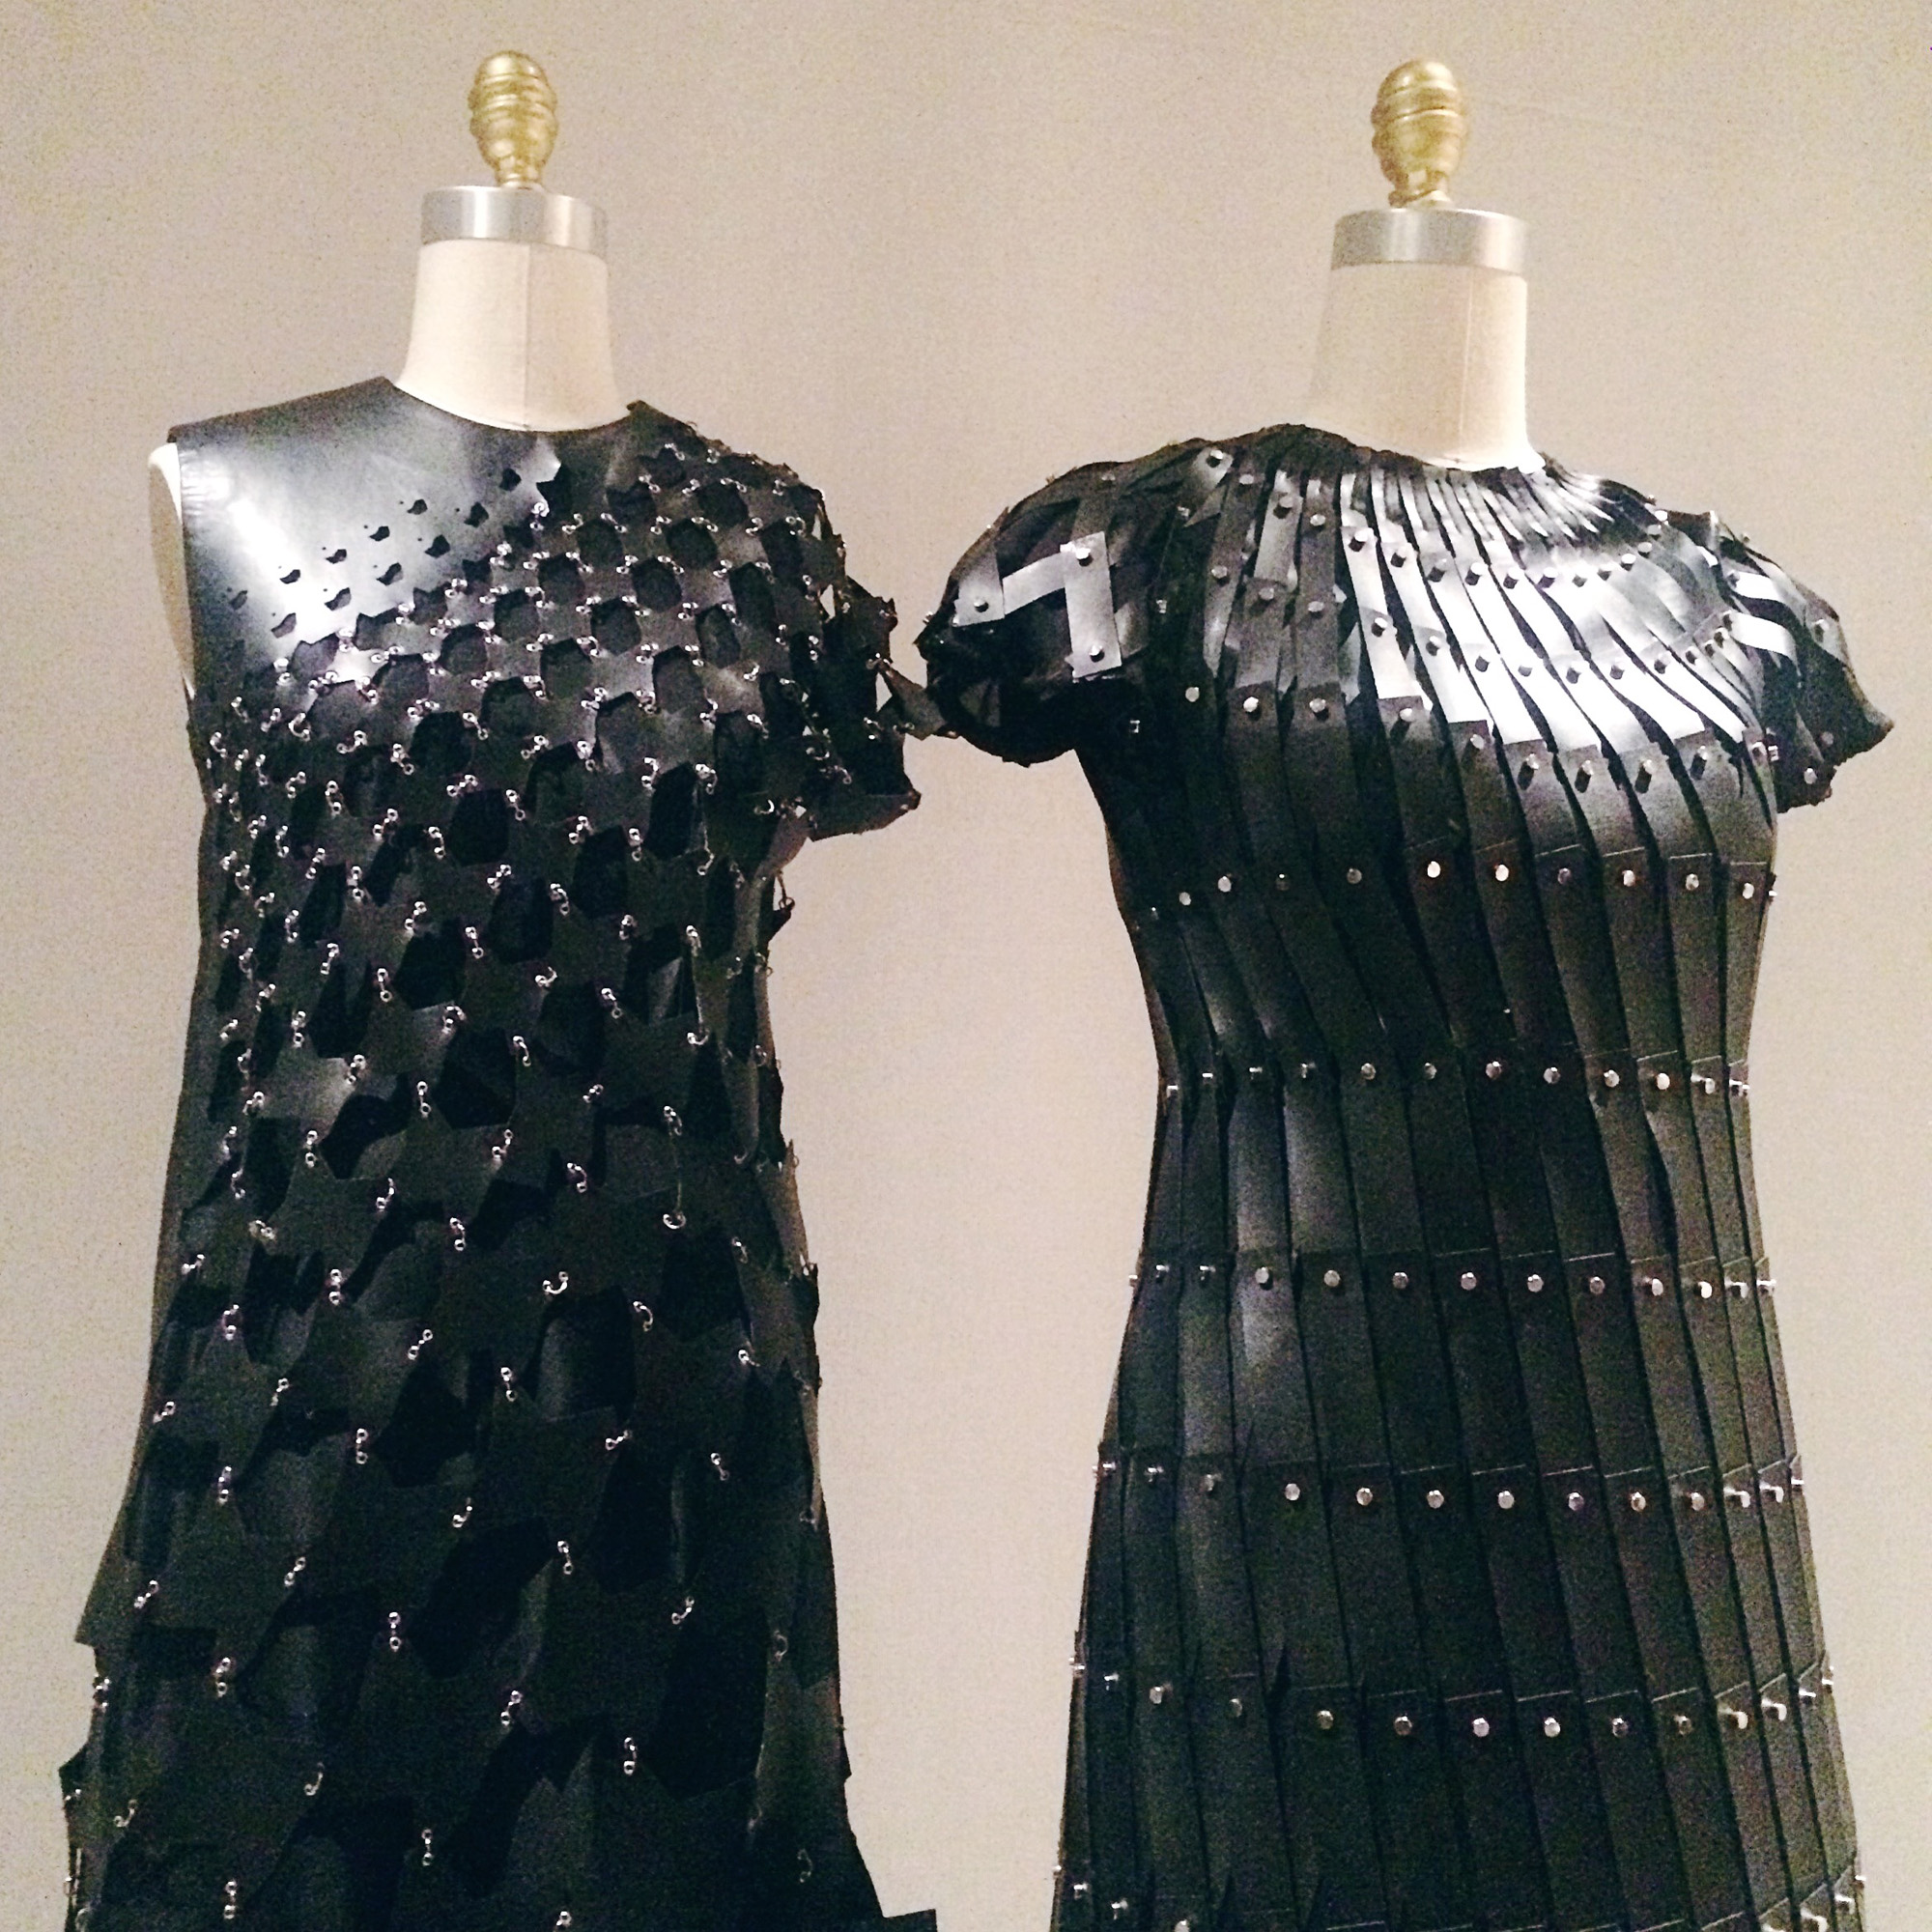 dresses by Rei Kawakubo Comme des Garçons on display at The Metropolitan Museum of Art in Manus x Machina